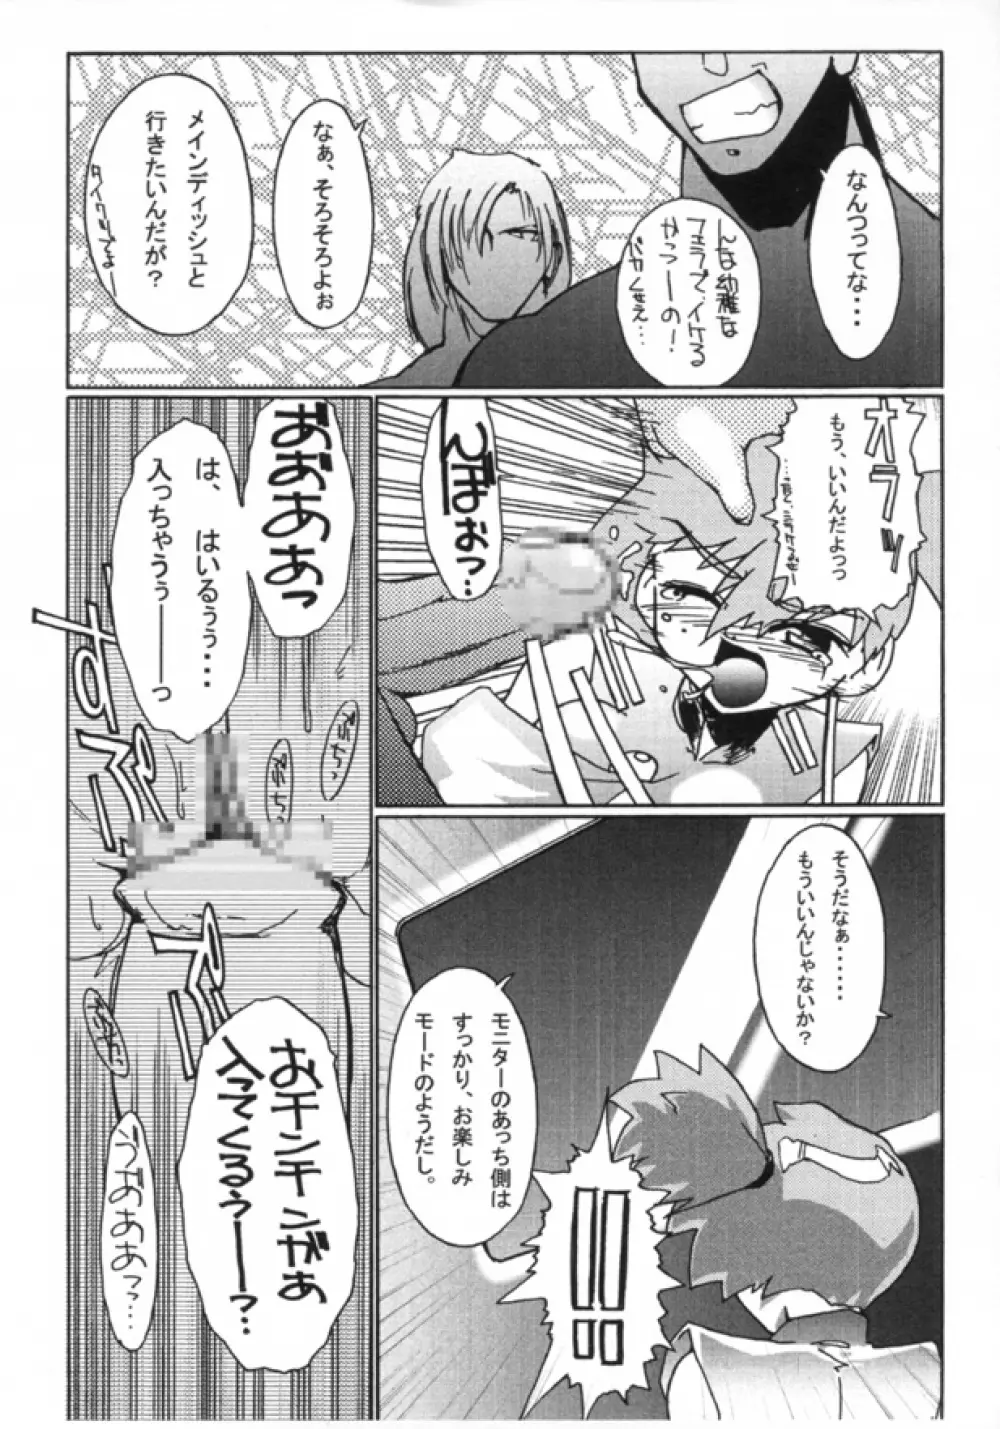 KASUMIX XPLOSION Kasumi Comic part5 - page46